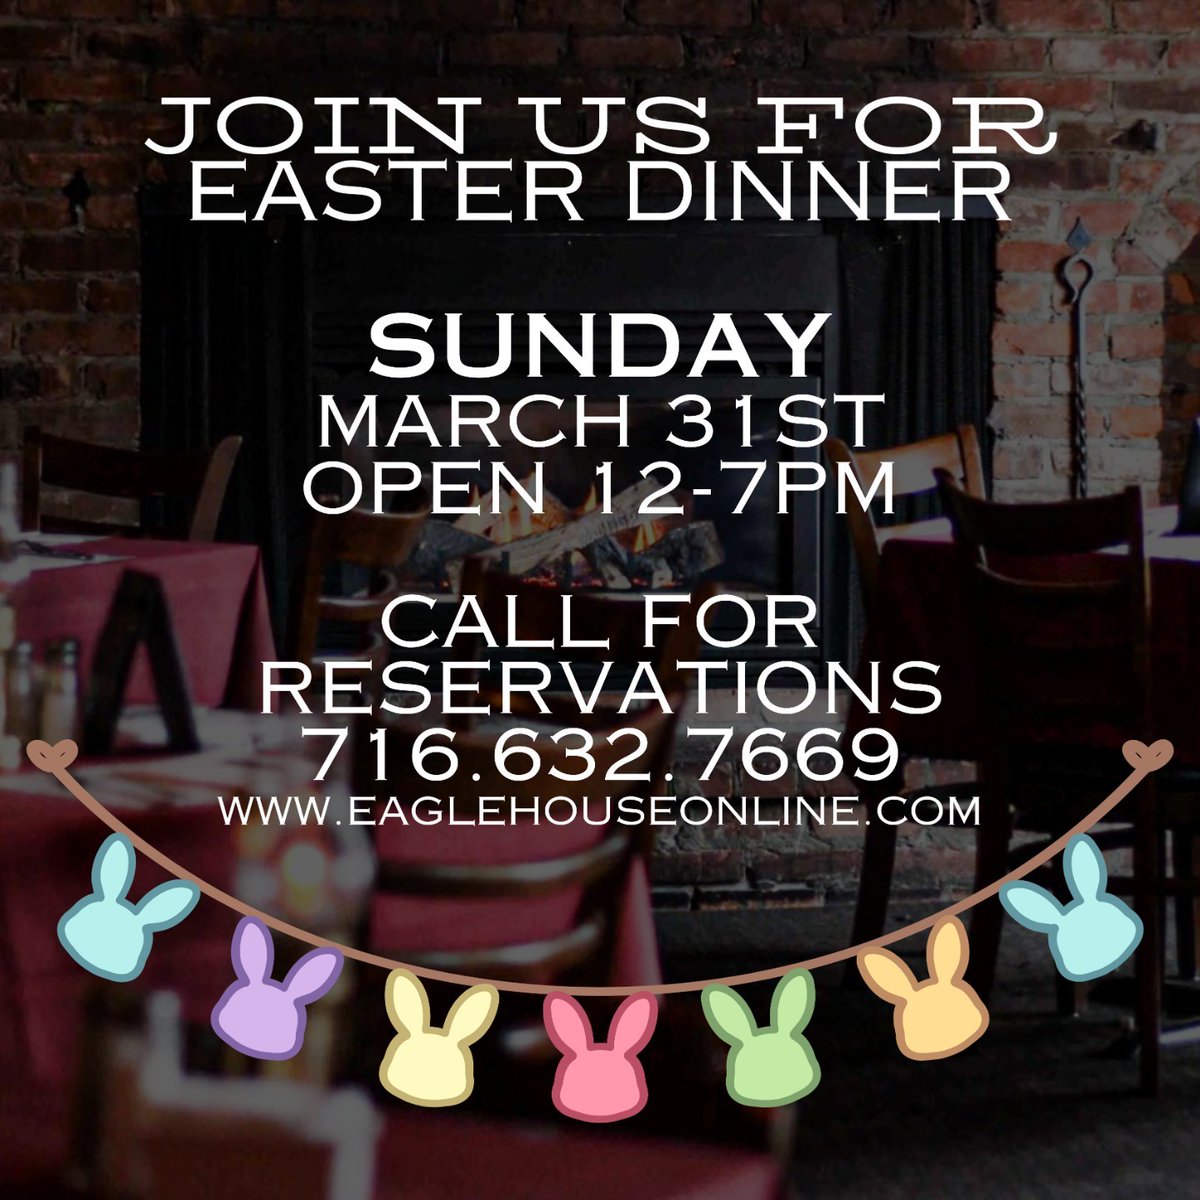 Reserve your table now for an unforgettable Easter dinner!🐣🐰#stepsawayfromashercrossing#easterdinner#eaglehouse#supportlocalbusiness#alwaysunited